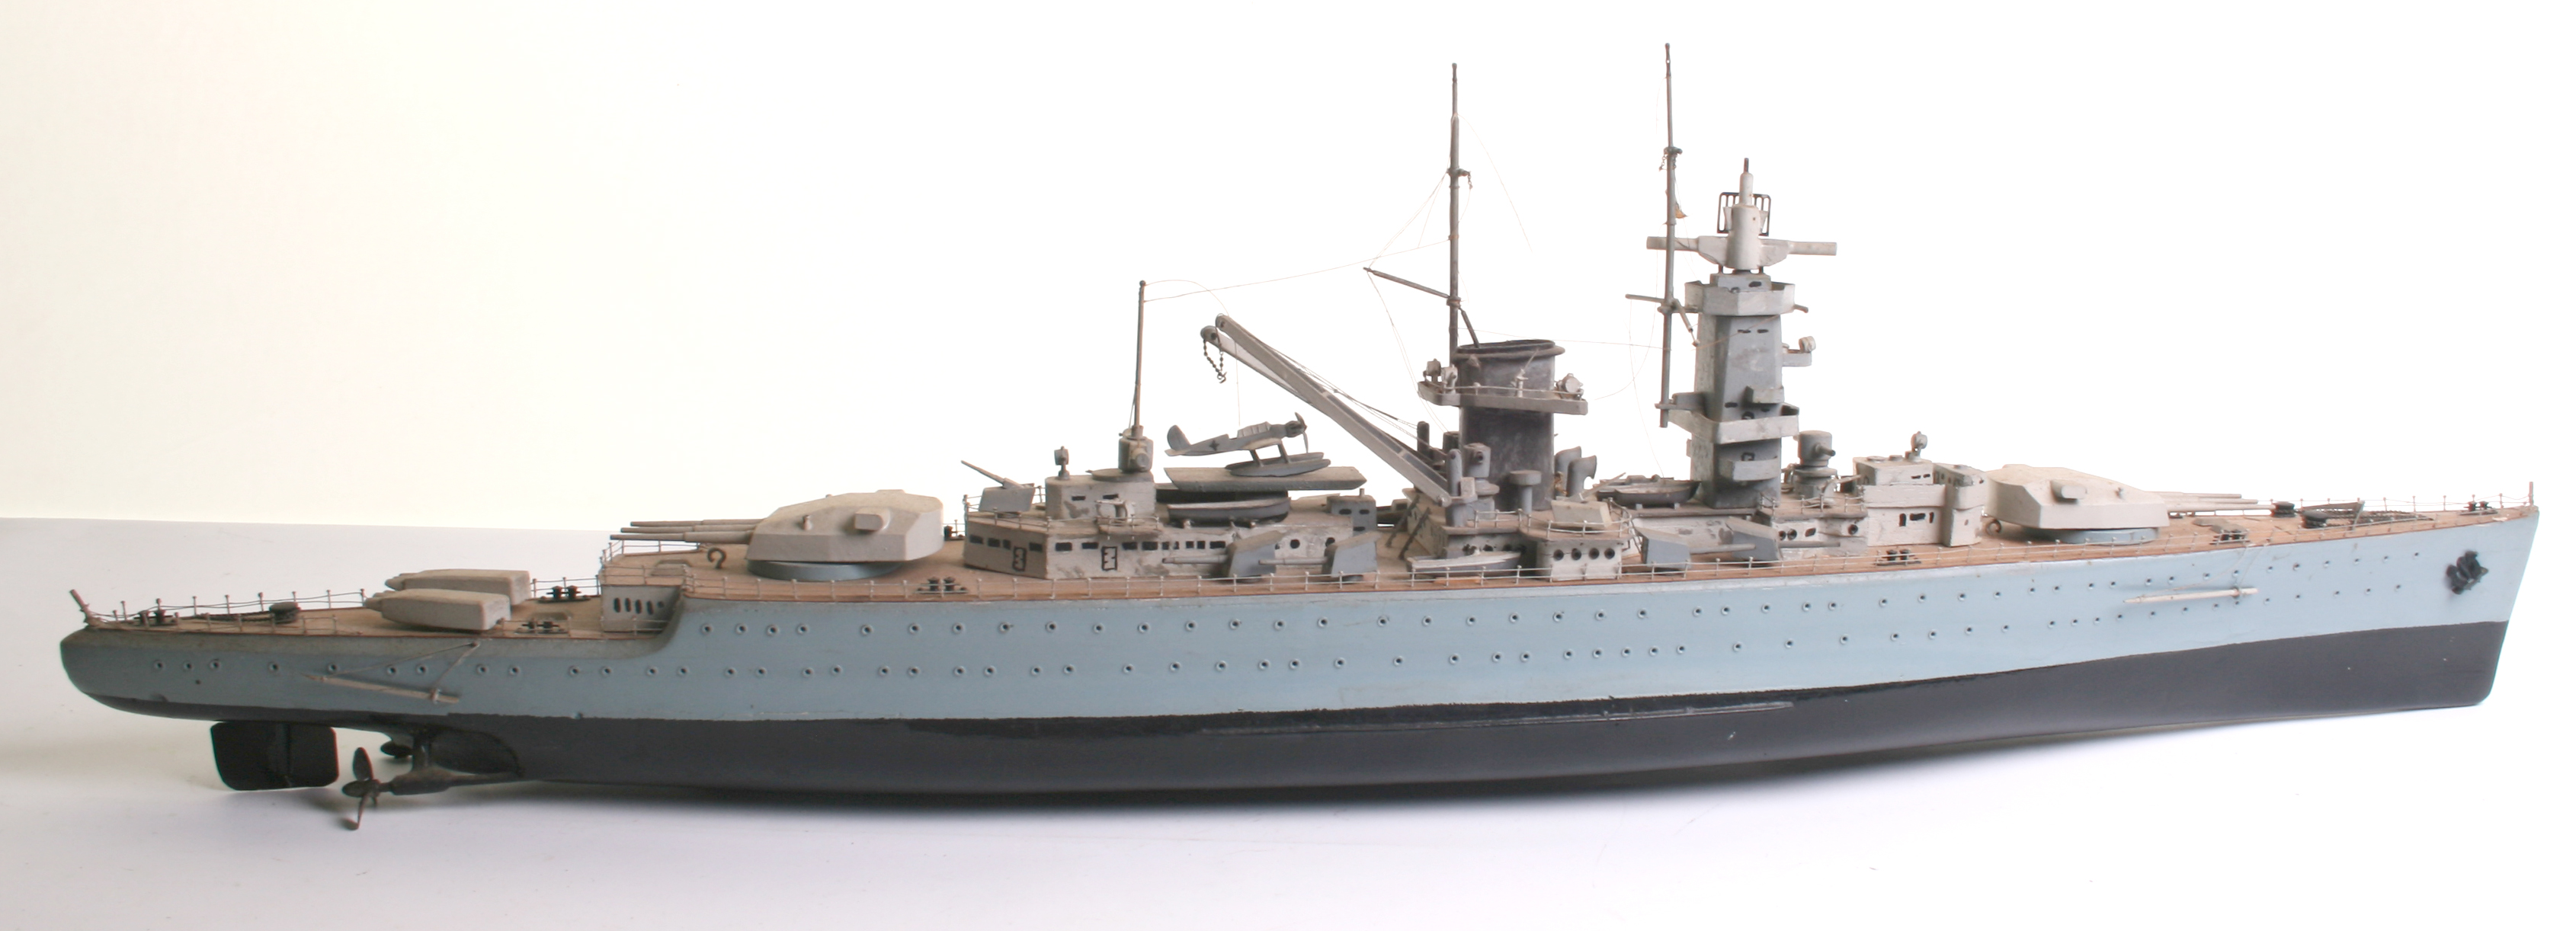 A wooden model of a German Deutschland-class heavy cruiser ‘Admiral Graf Spree’ Battleship, - Image 2 of 8